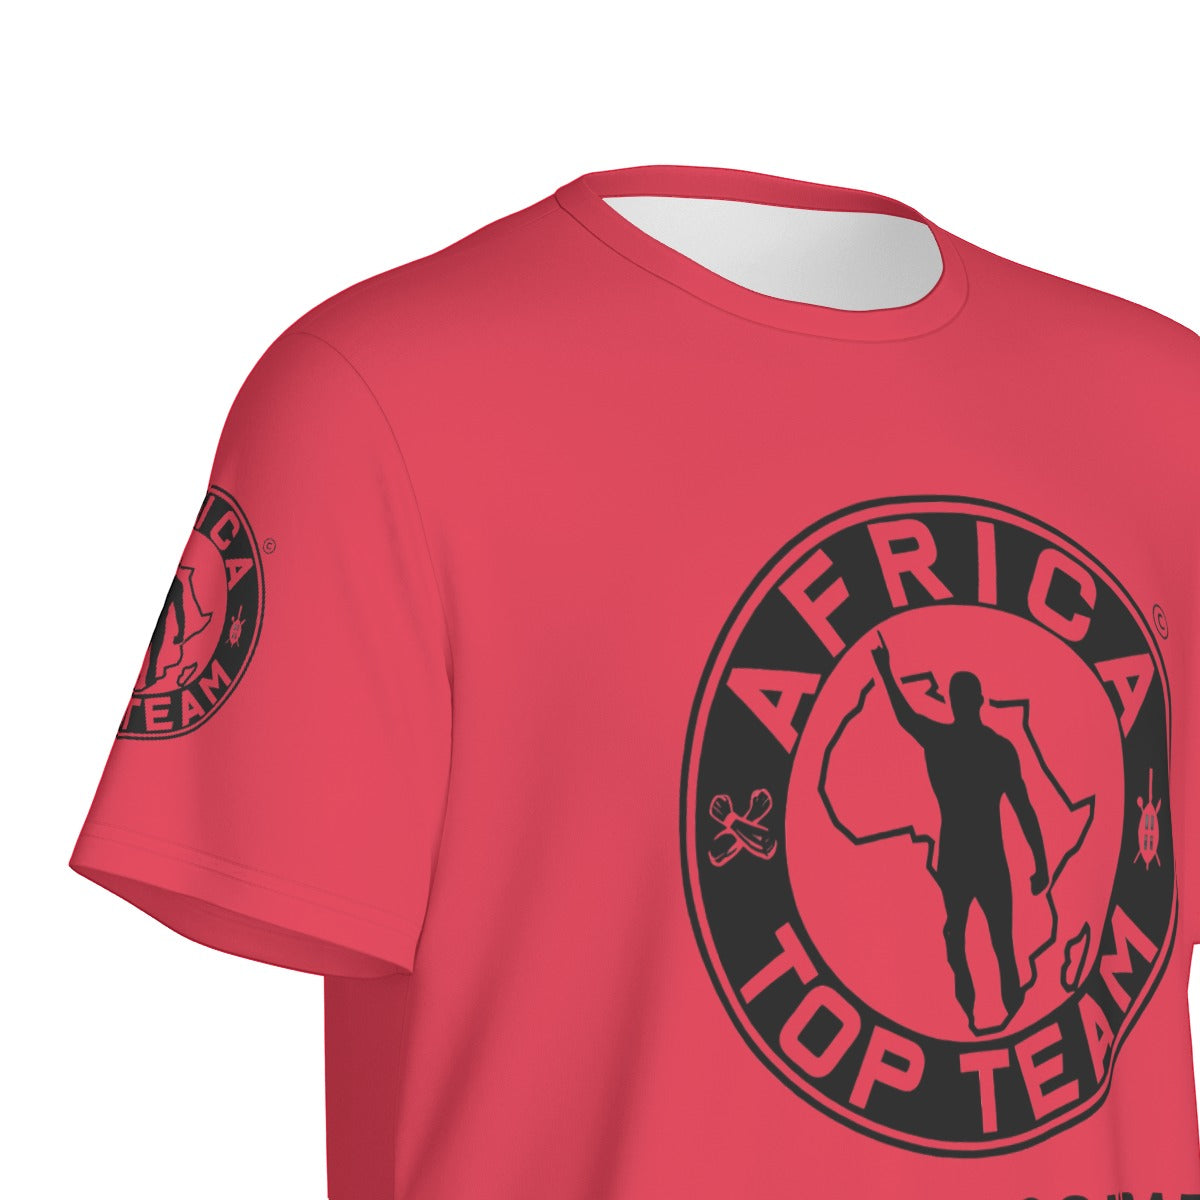 Africa Top Team Red T-Shirt